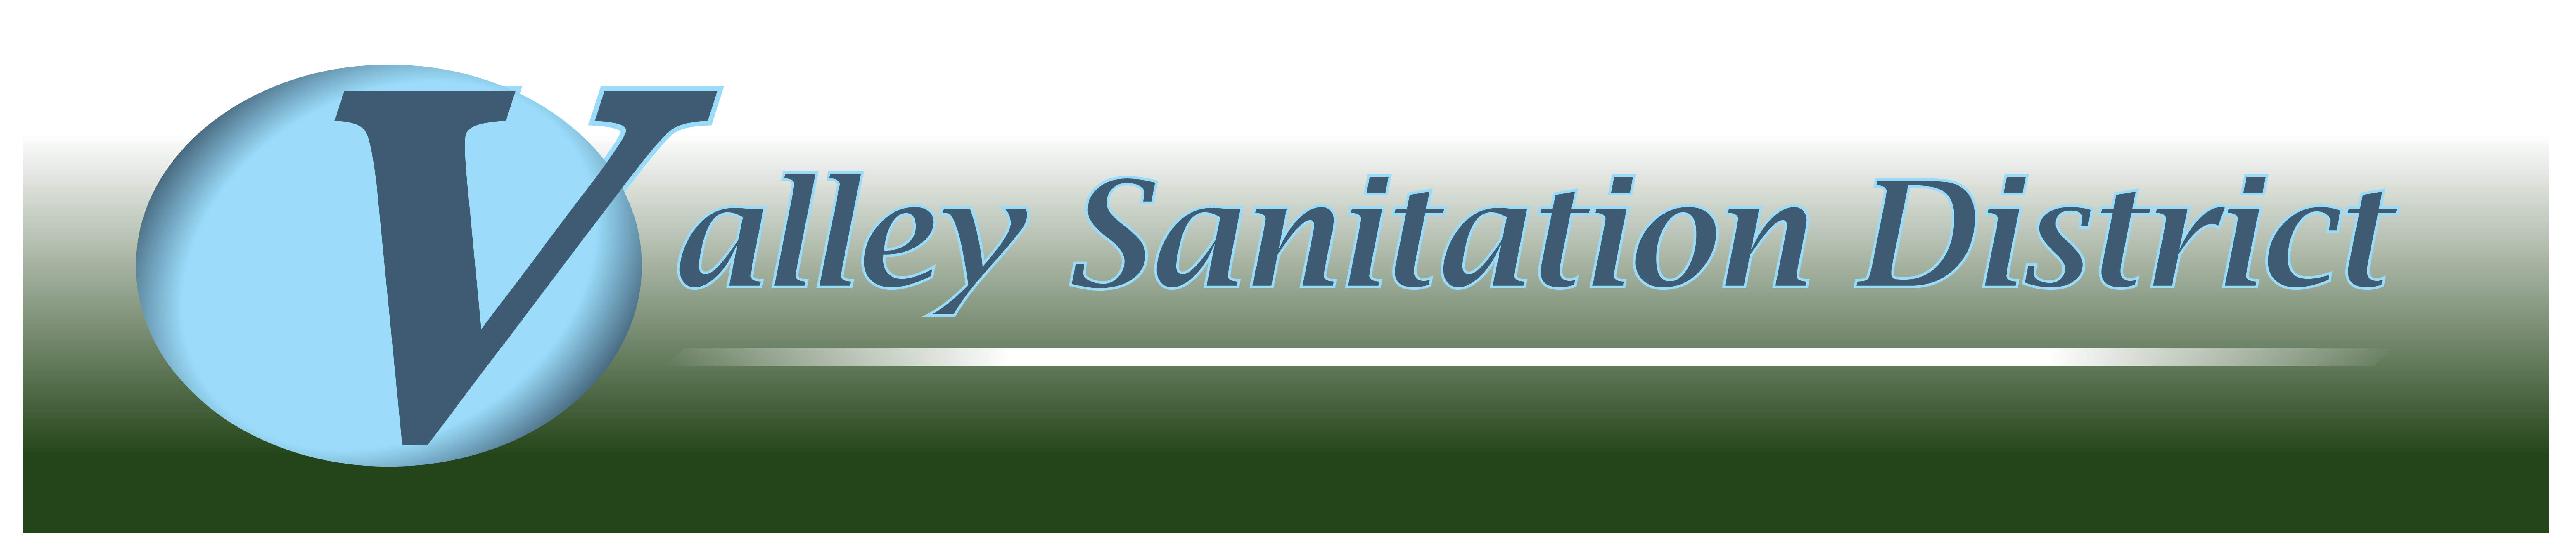 Valley Sanitation District